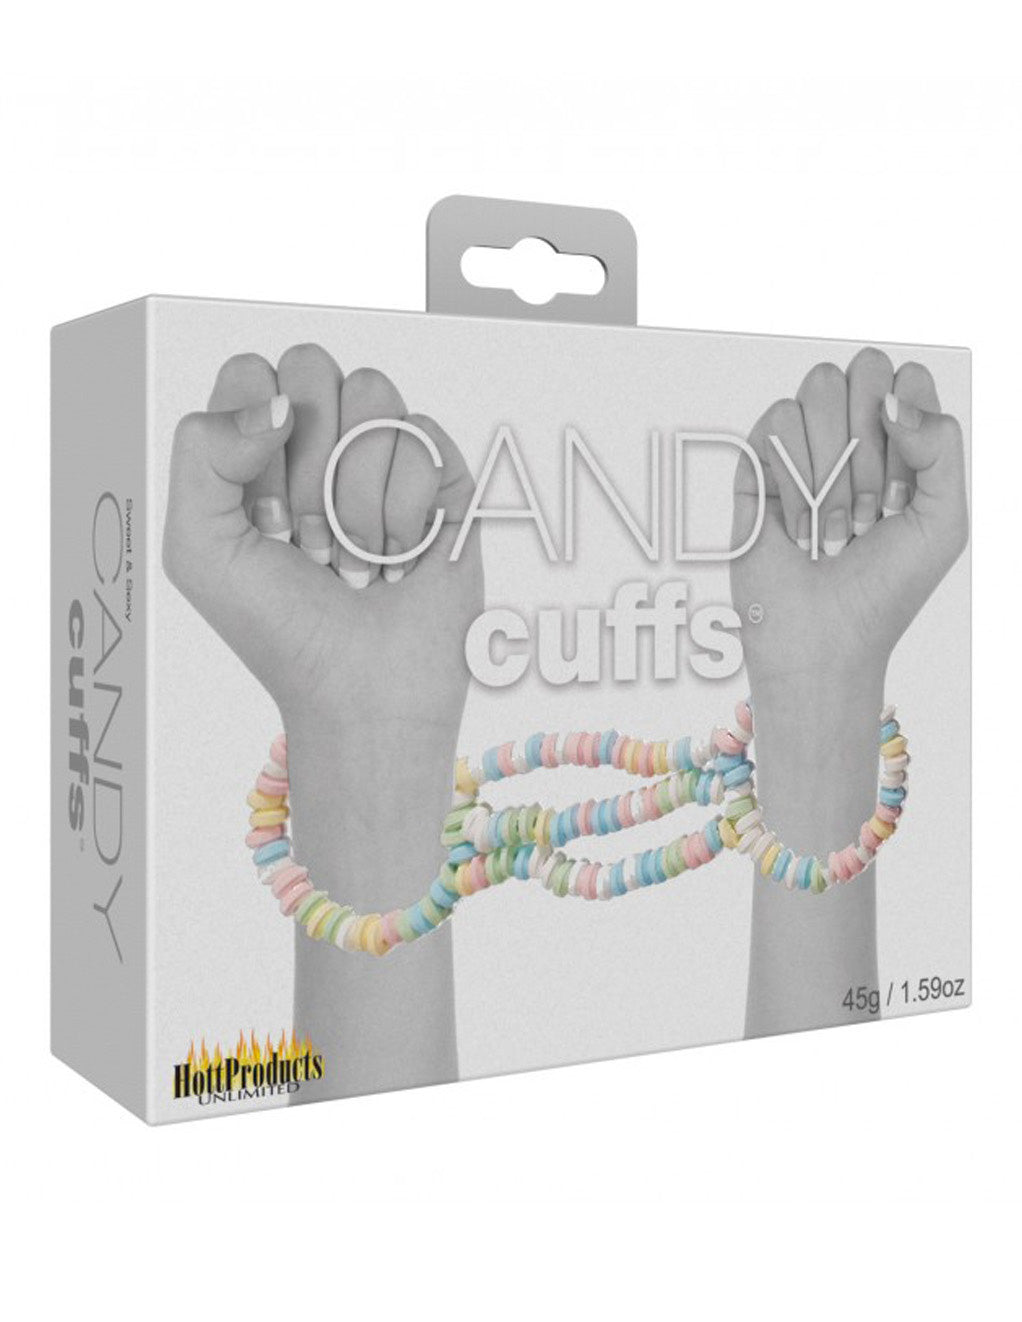 Sweet and Sexy Candy Cuffs- Box